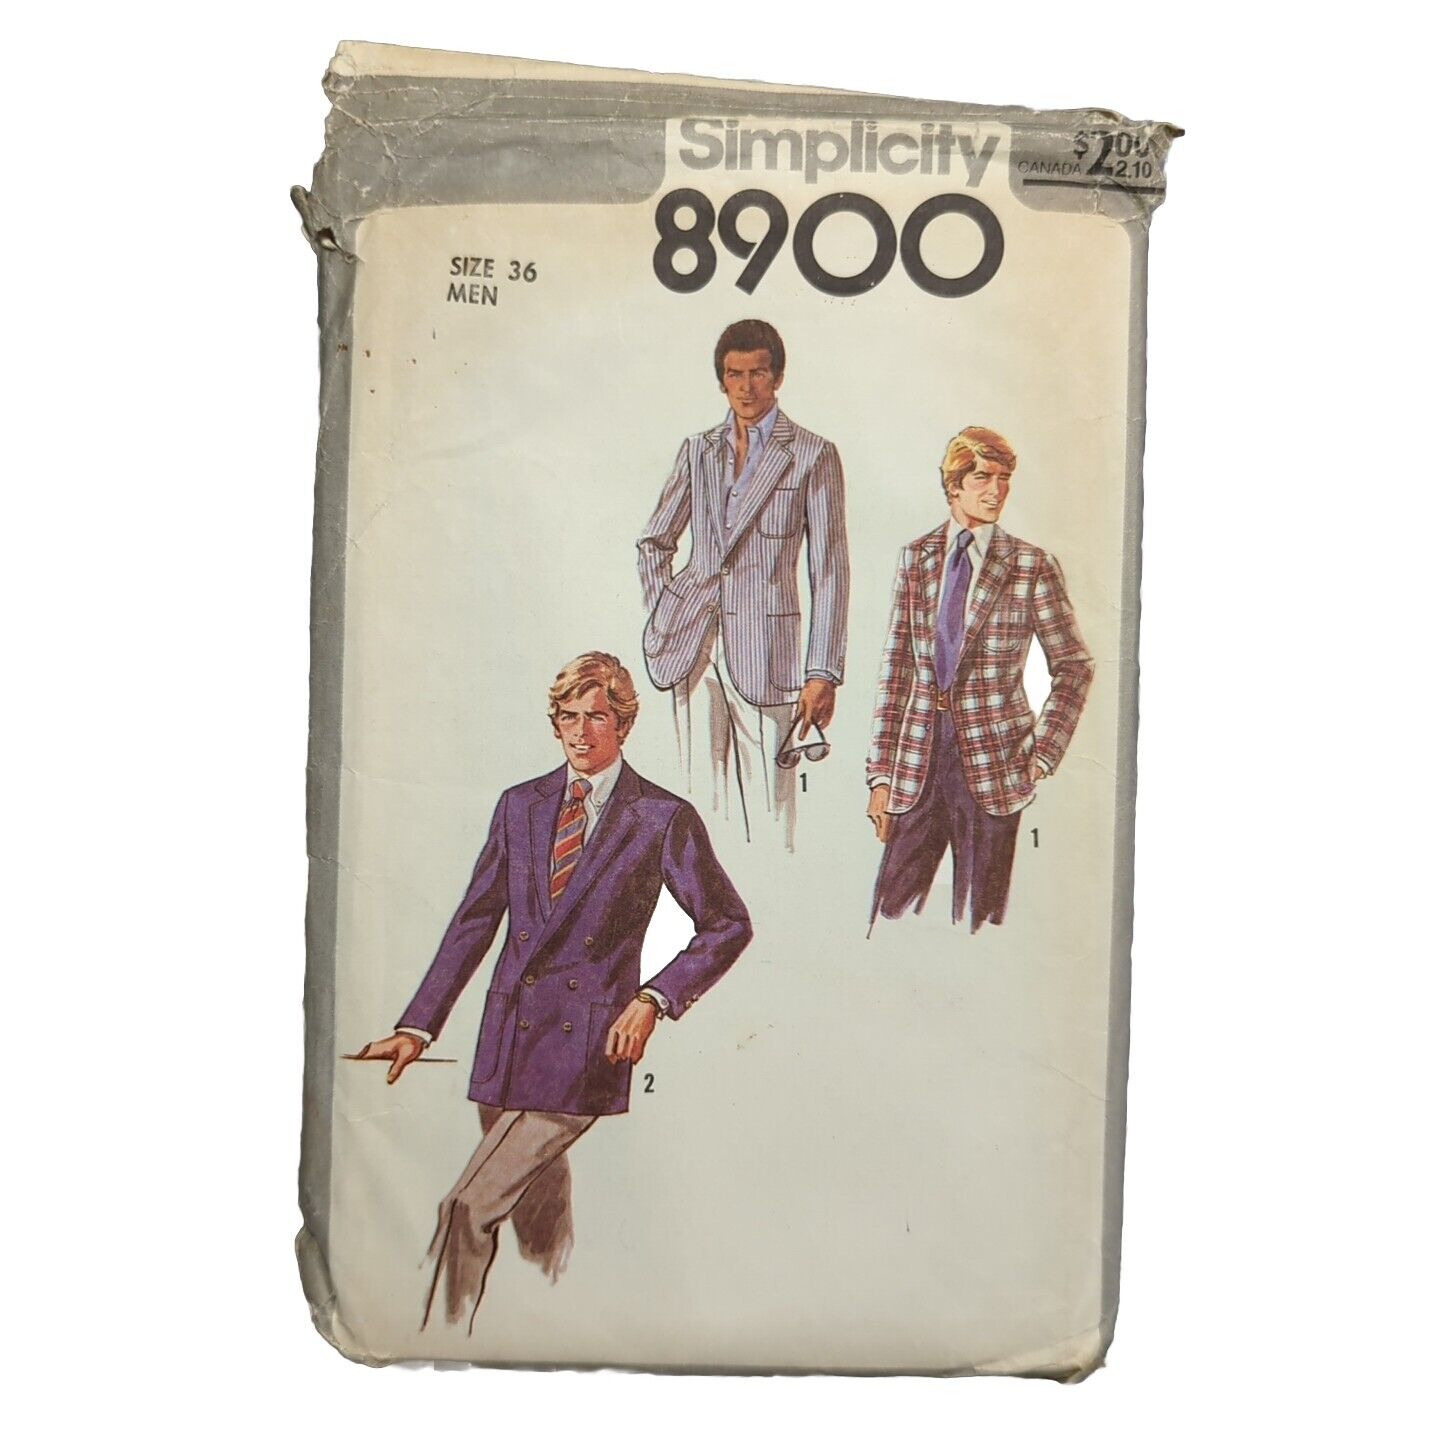 Vintage 1979 Simplicity Sewing Pattern 8900 Size 36 Men's Lined Jackets UNCUT